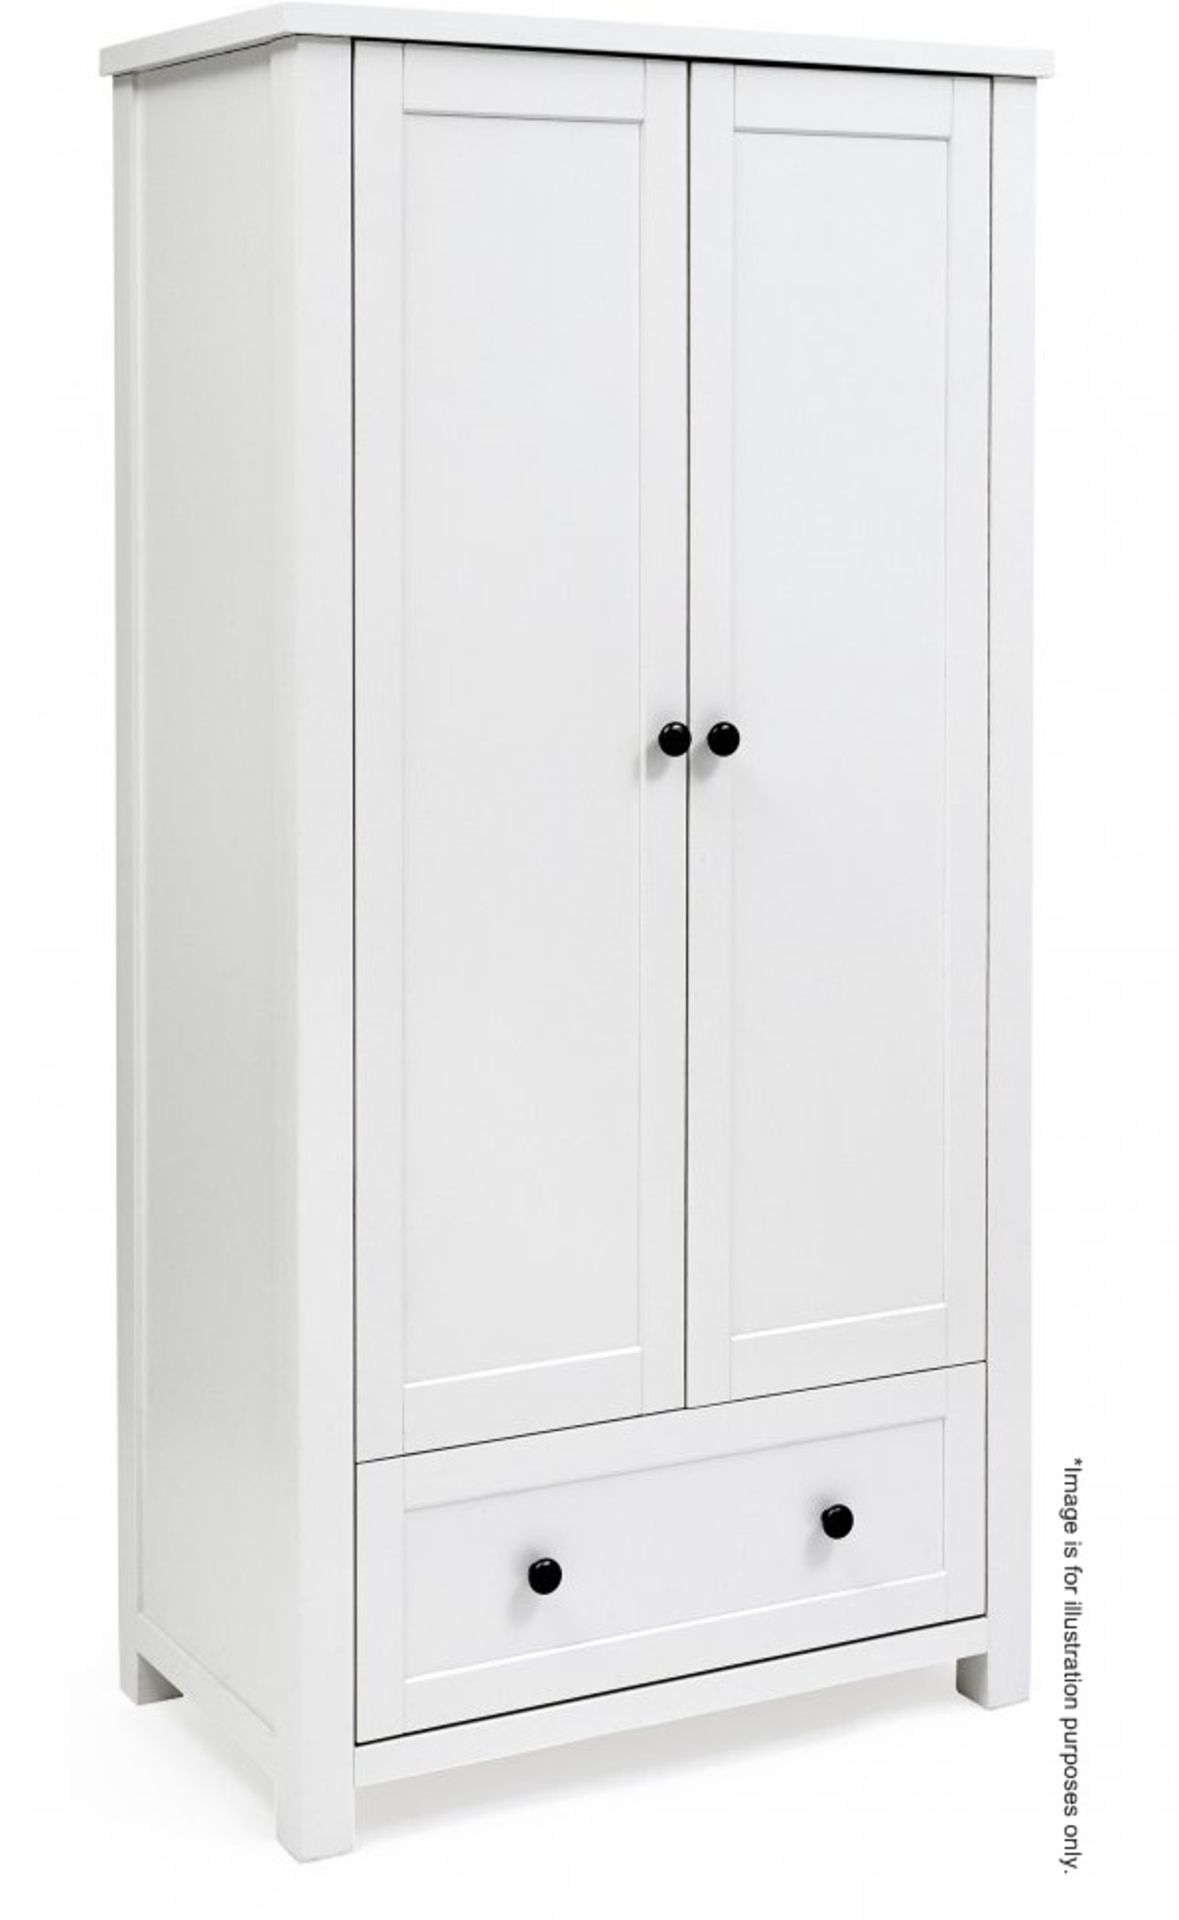 1 x Silver Cross New Nostalgia Full Size Wardrobe In White - Nursery Furniture - H180 x W90 x